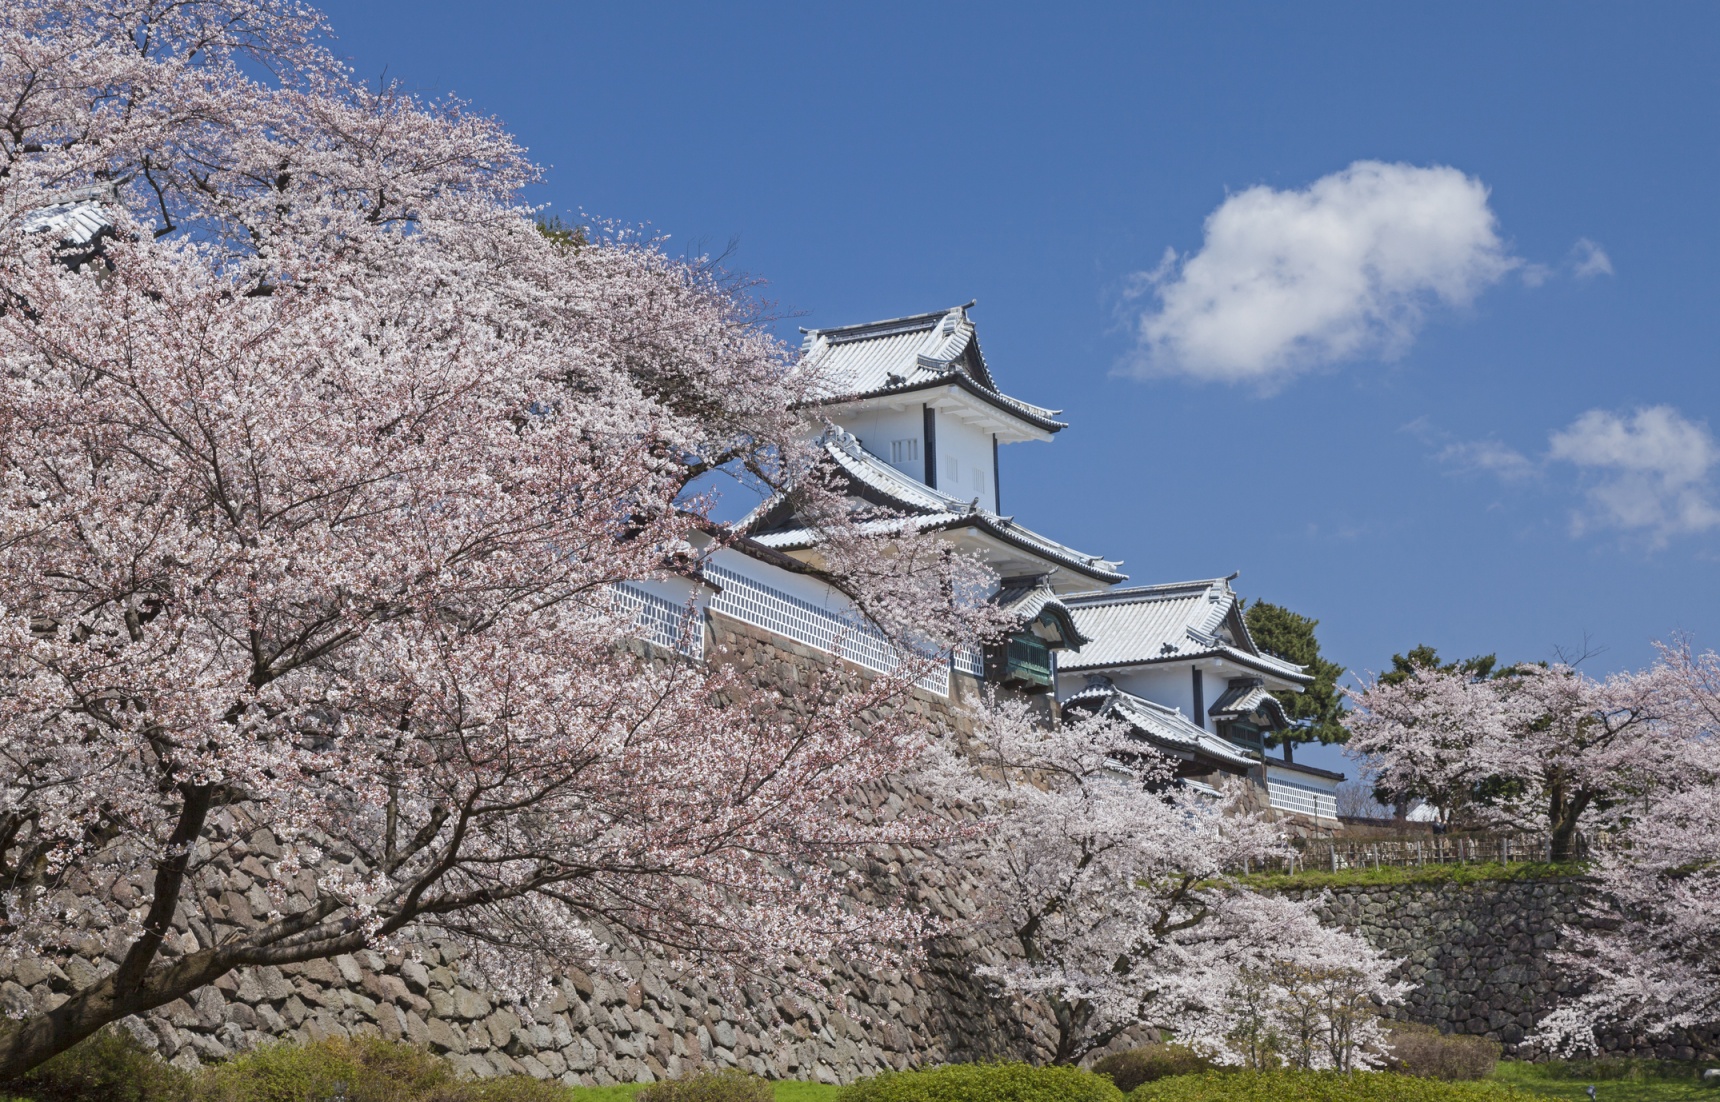 Kanazawa: Traditional Scenes Among the Sakura